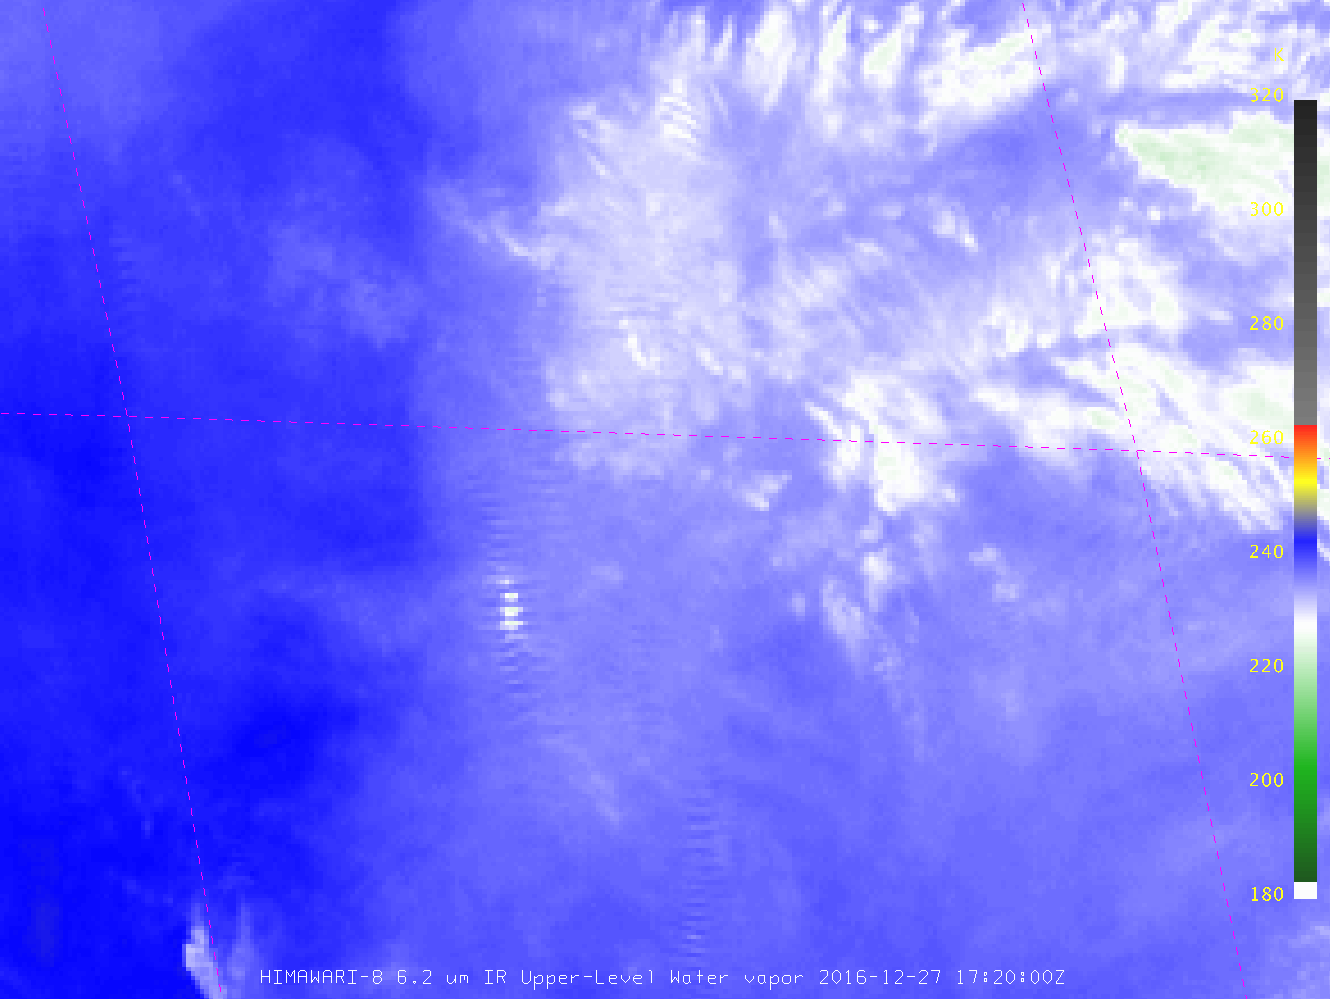 Himawari-8 Infrared Imagery (6.2 µm), 1600-1900 UTC on 27 December 2016 [click to animate]